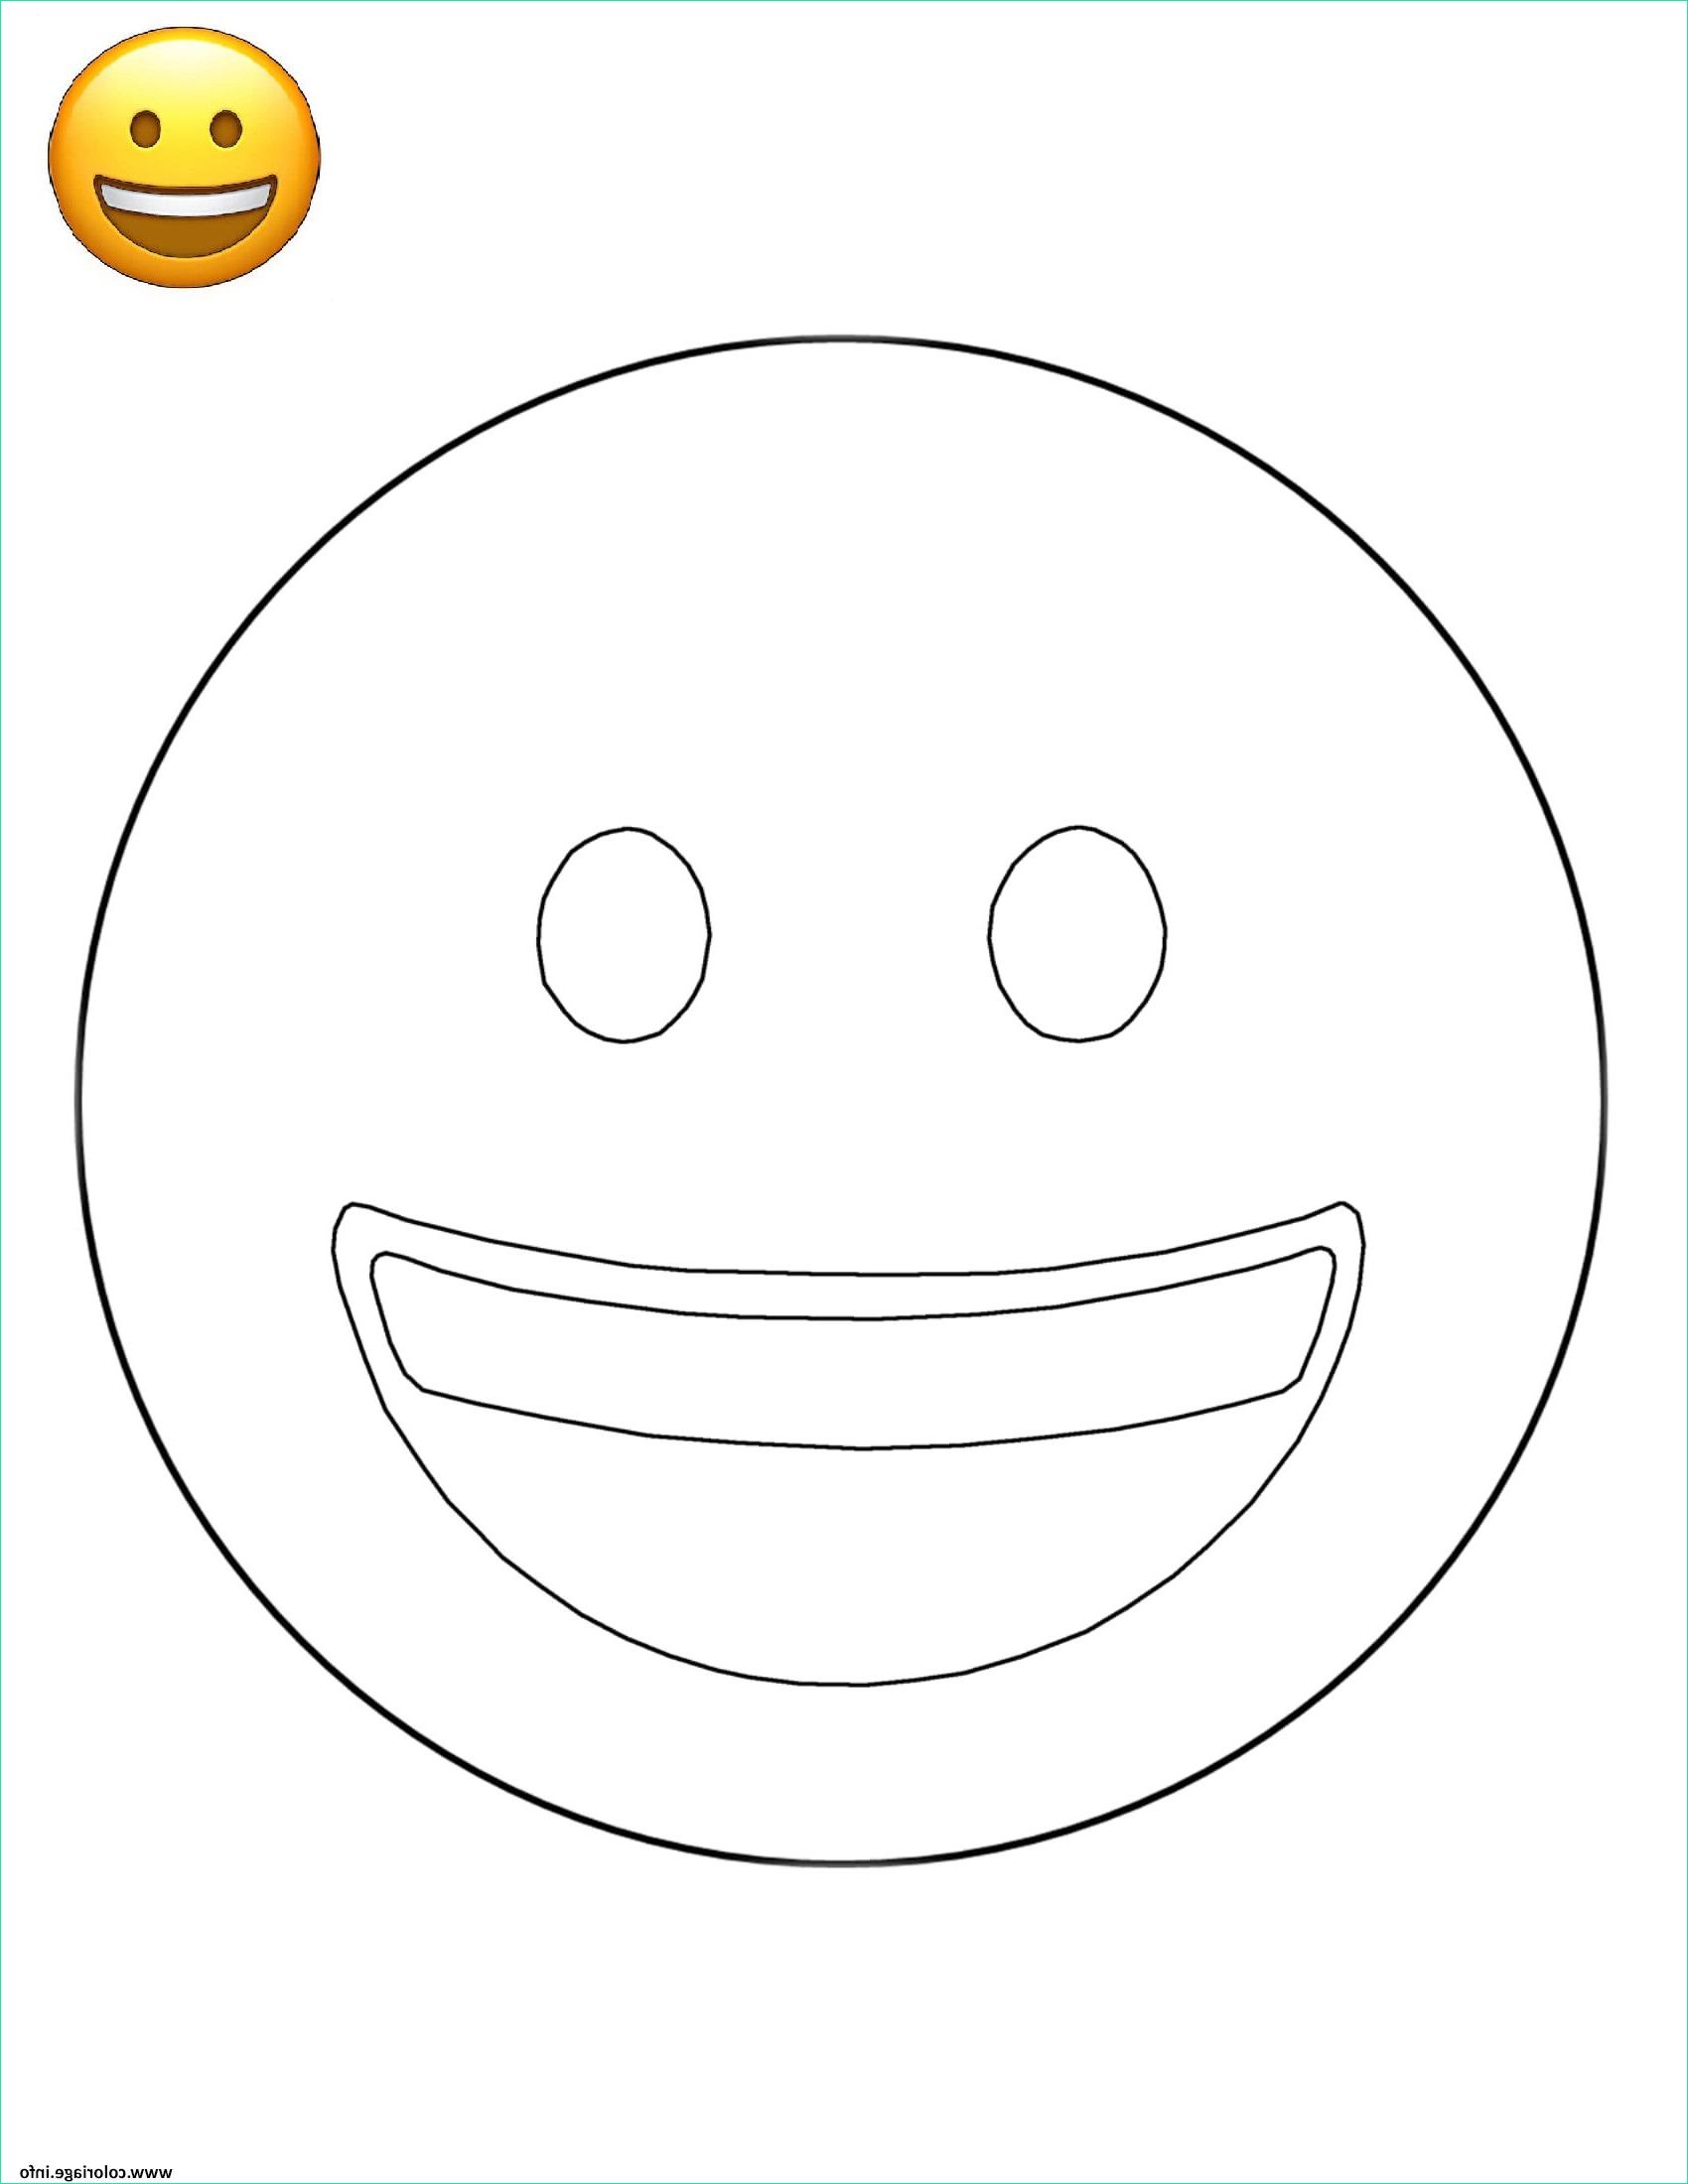 Dessin Emoji A Colorier Luxe Photographie Coloriage Emoji Smiling Face Smiley Dessin